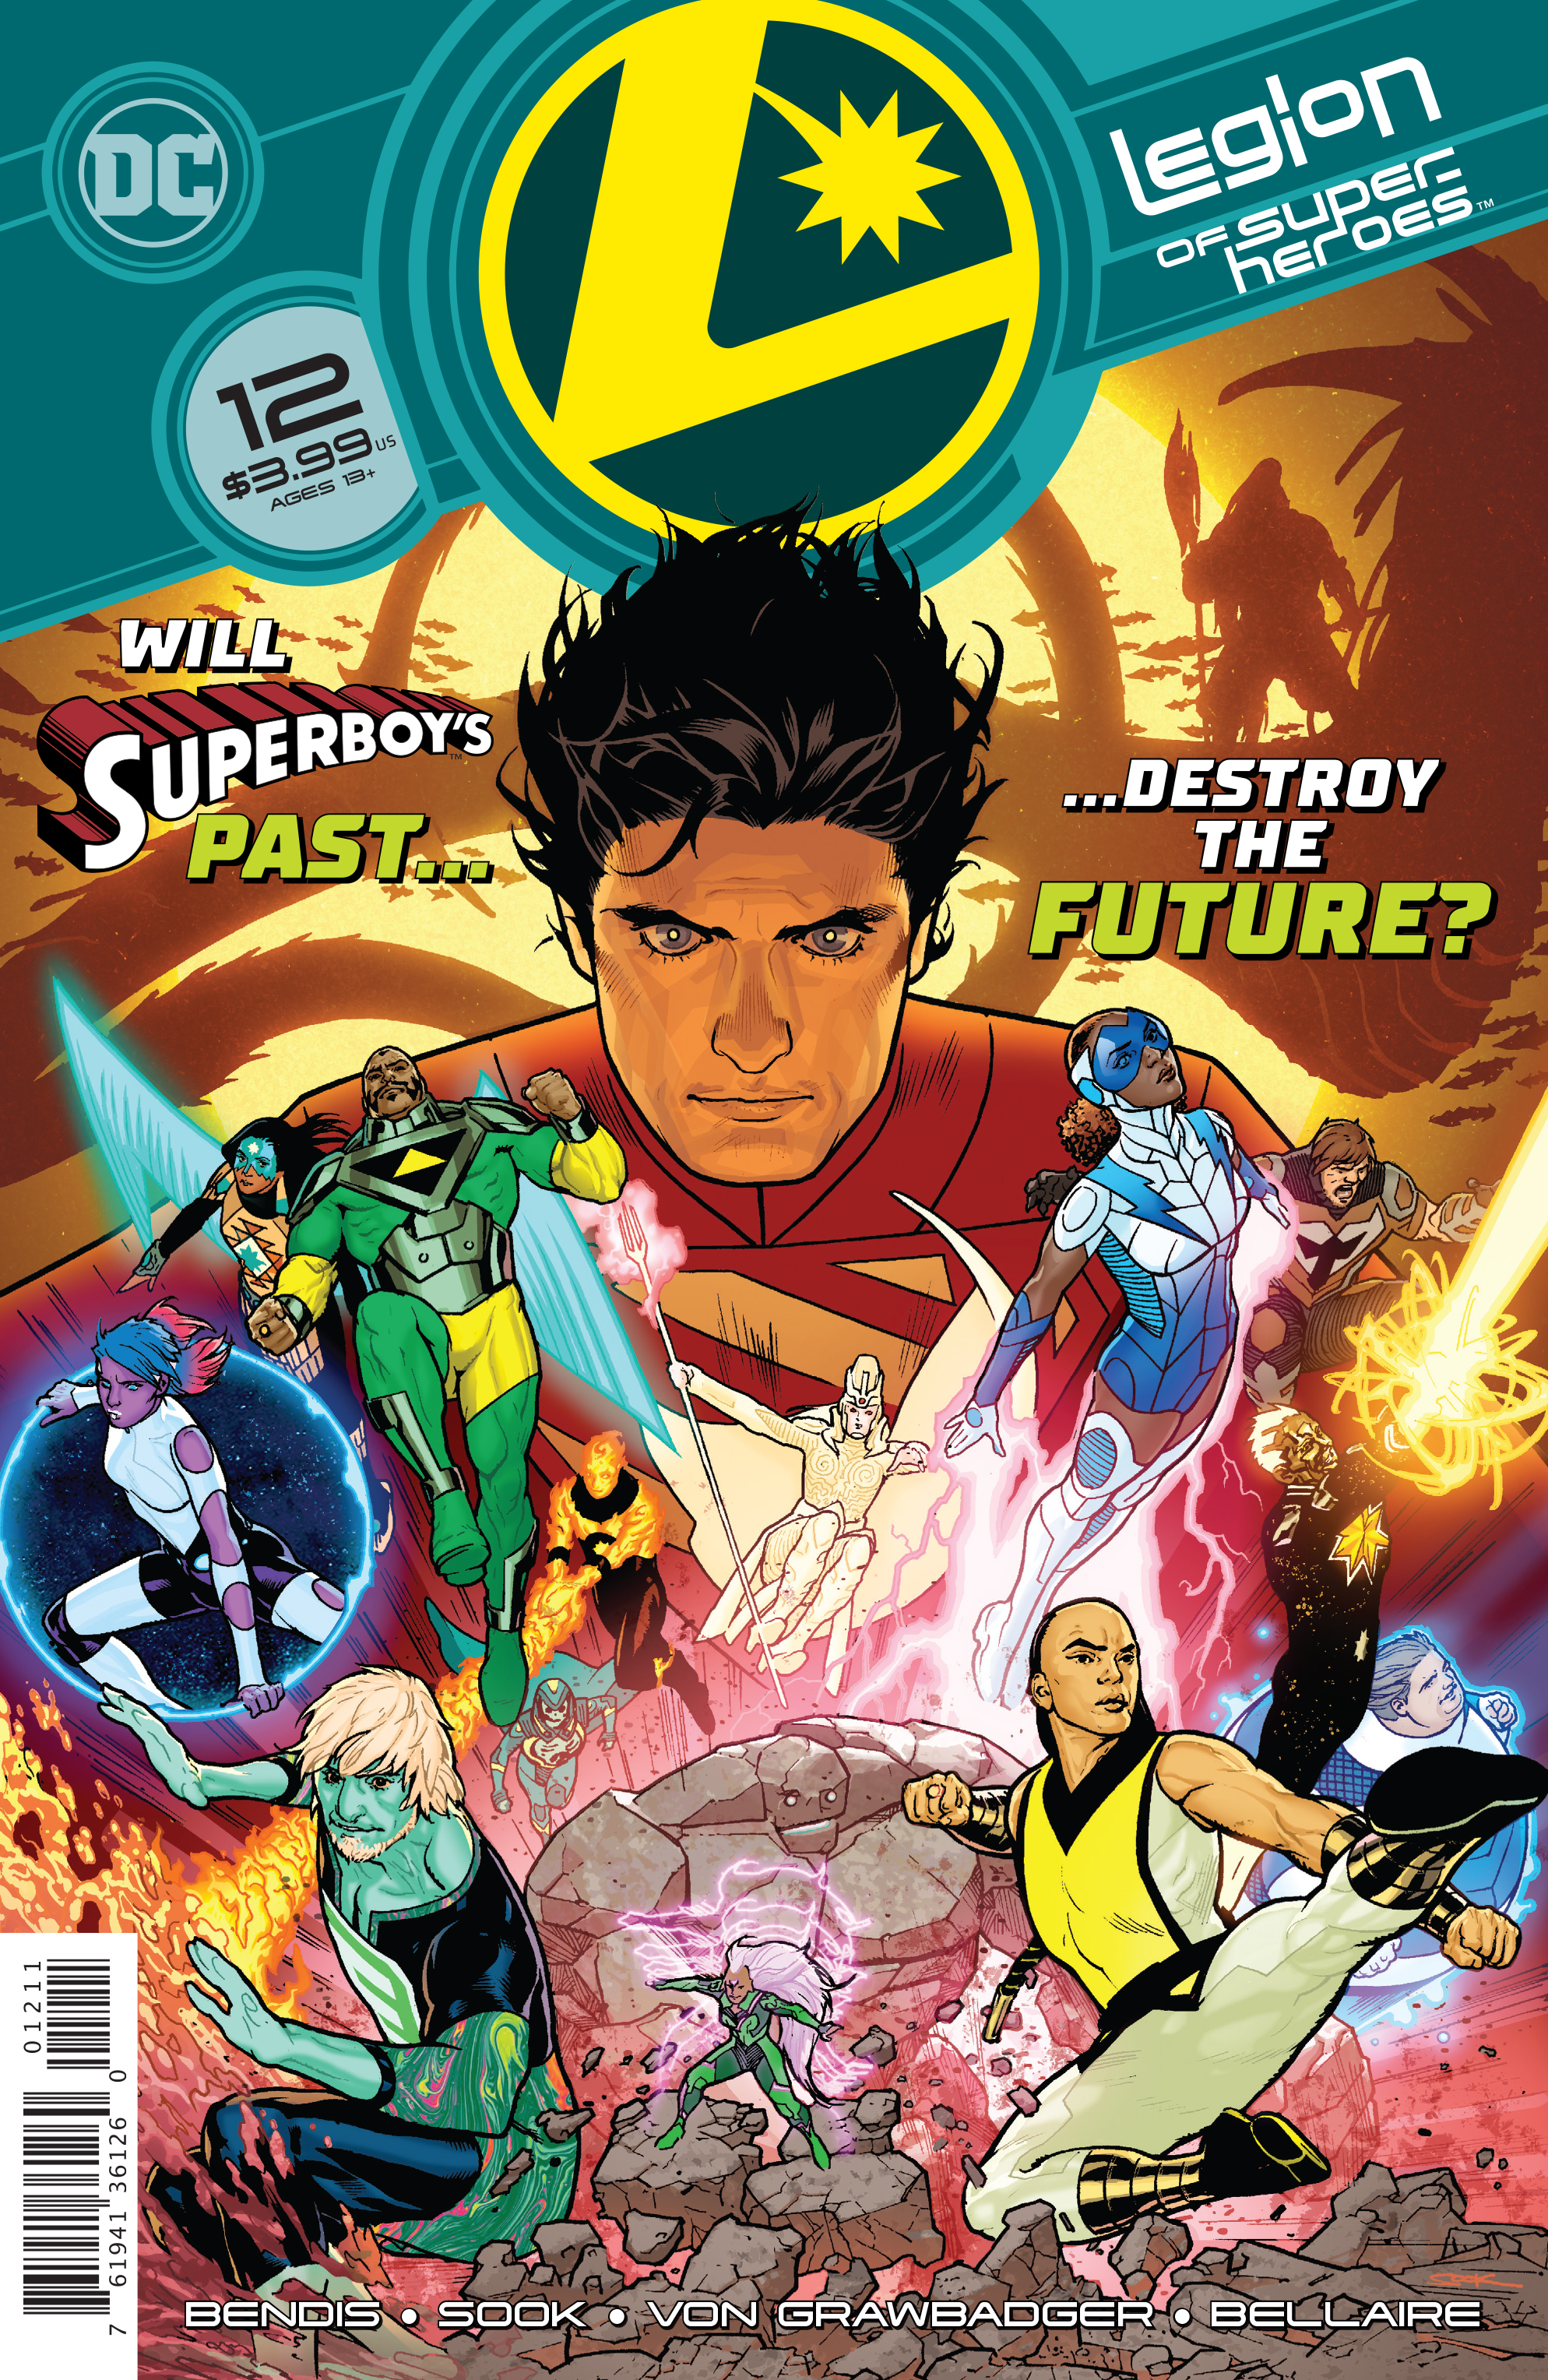 Legion of Super-Heroes #12 Cover A Ryan Sook (2019)